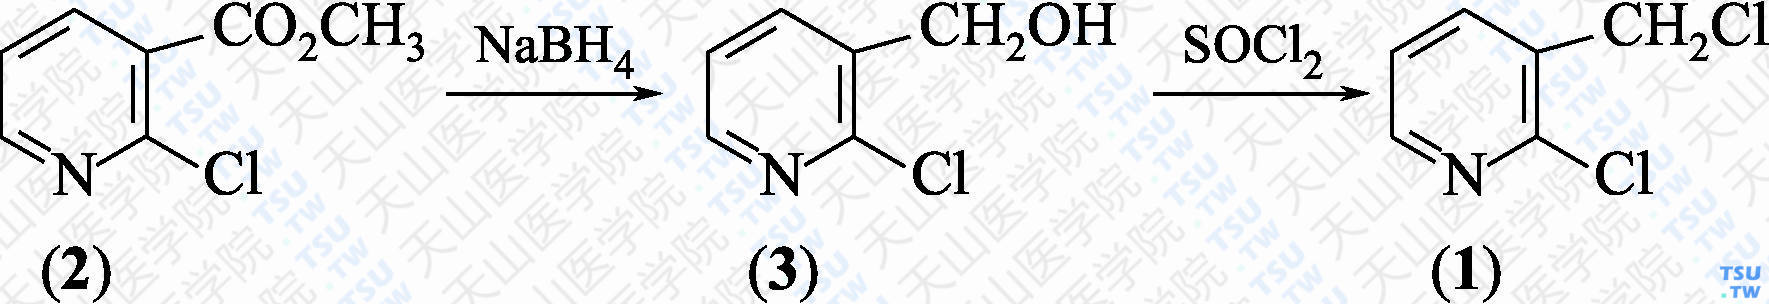 2-氯-3-氯甲基吡啶（分子式：C<sub>6</sub>H<sub>5</sub>Cl<sub>2</sub>N）的合成方法路线及其结构式